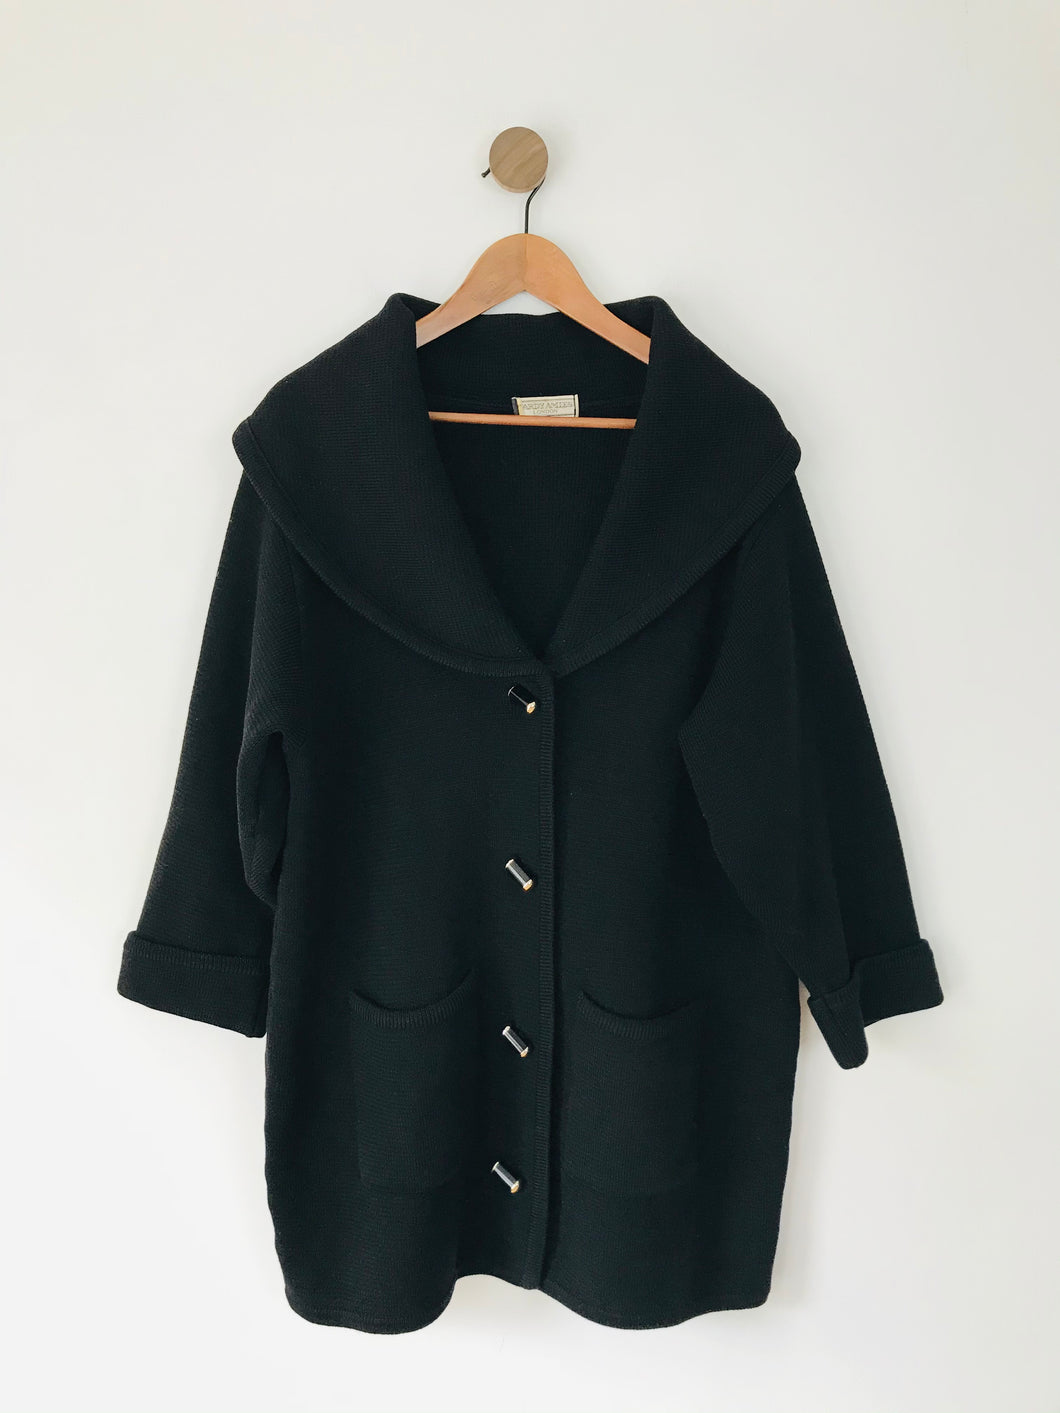 Hardy Amies Women’s Vintage Knit Jacket Overcoat | One Size | Black